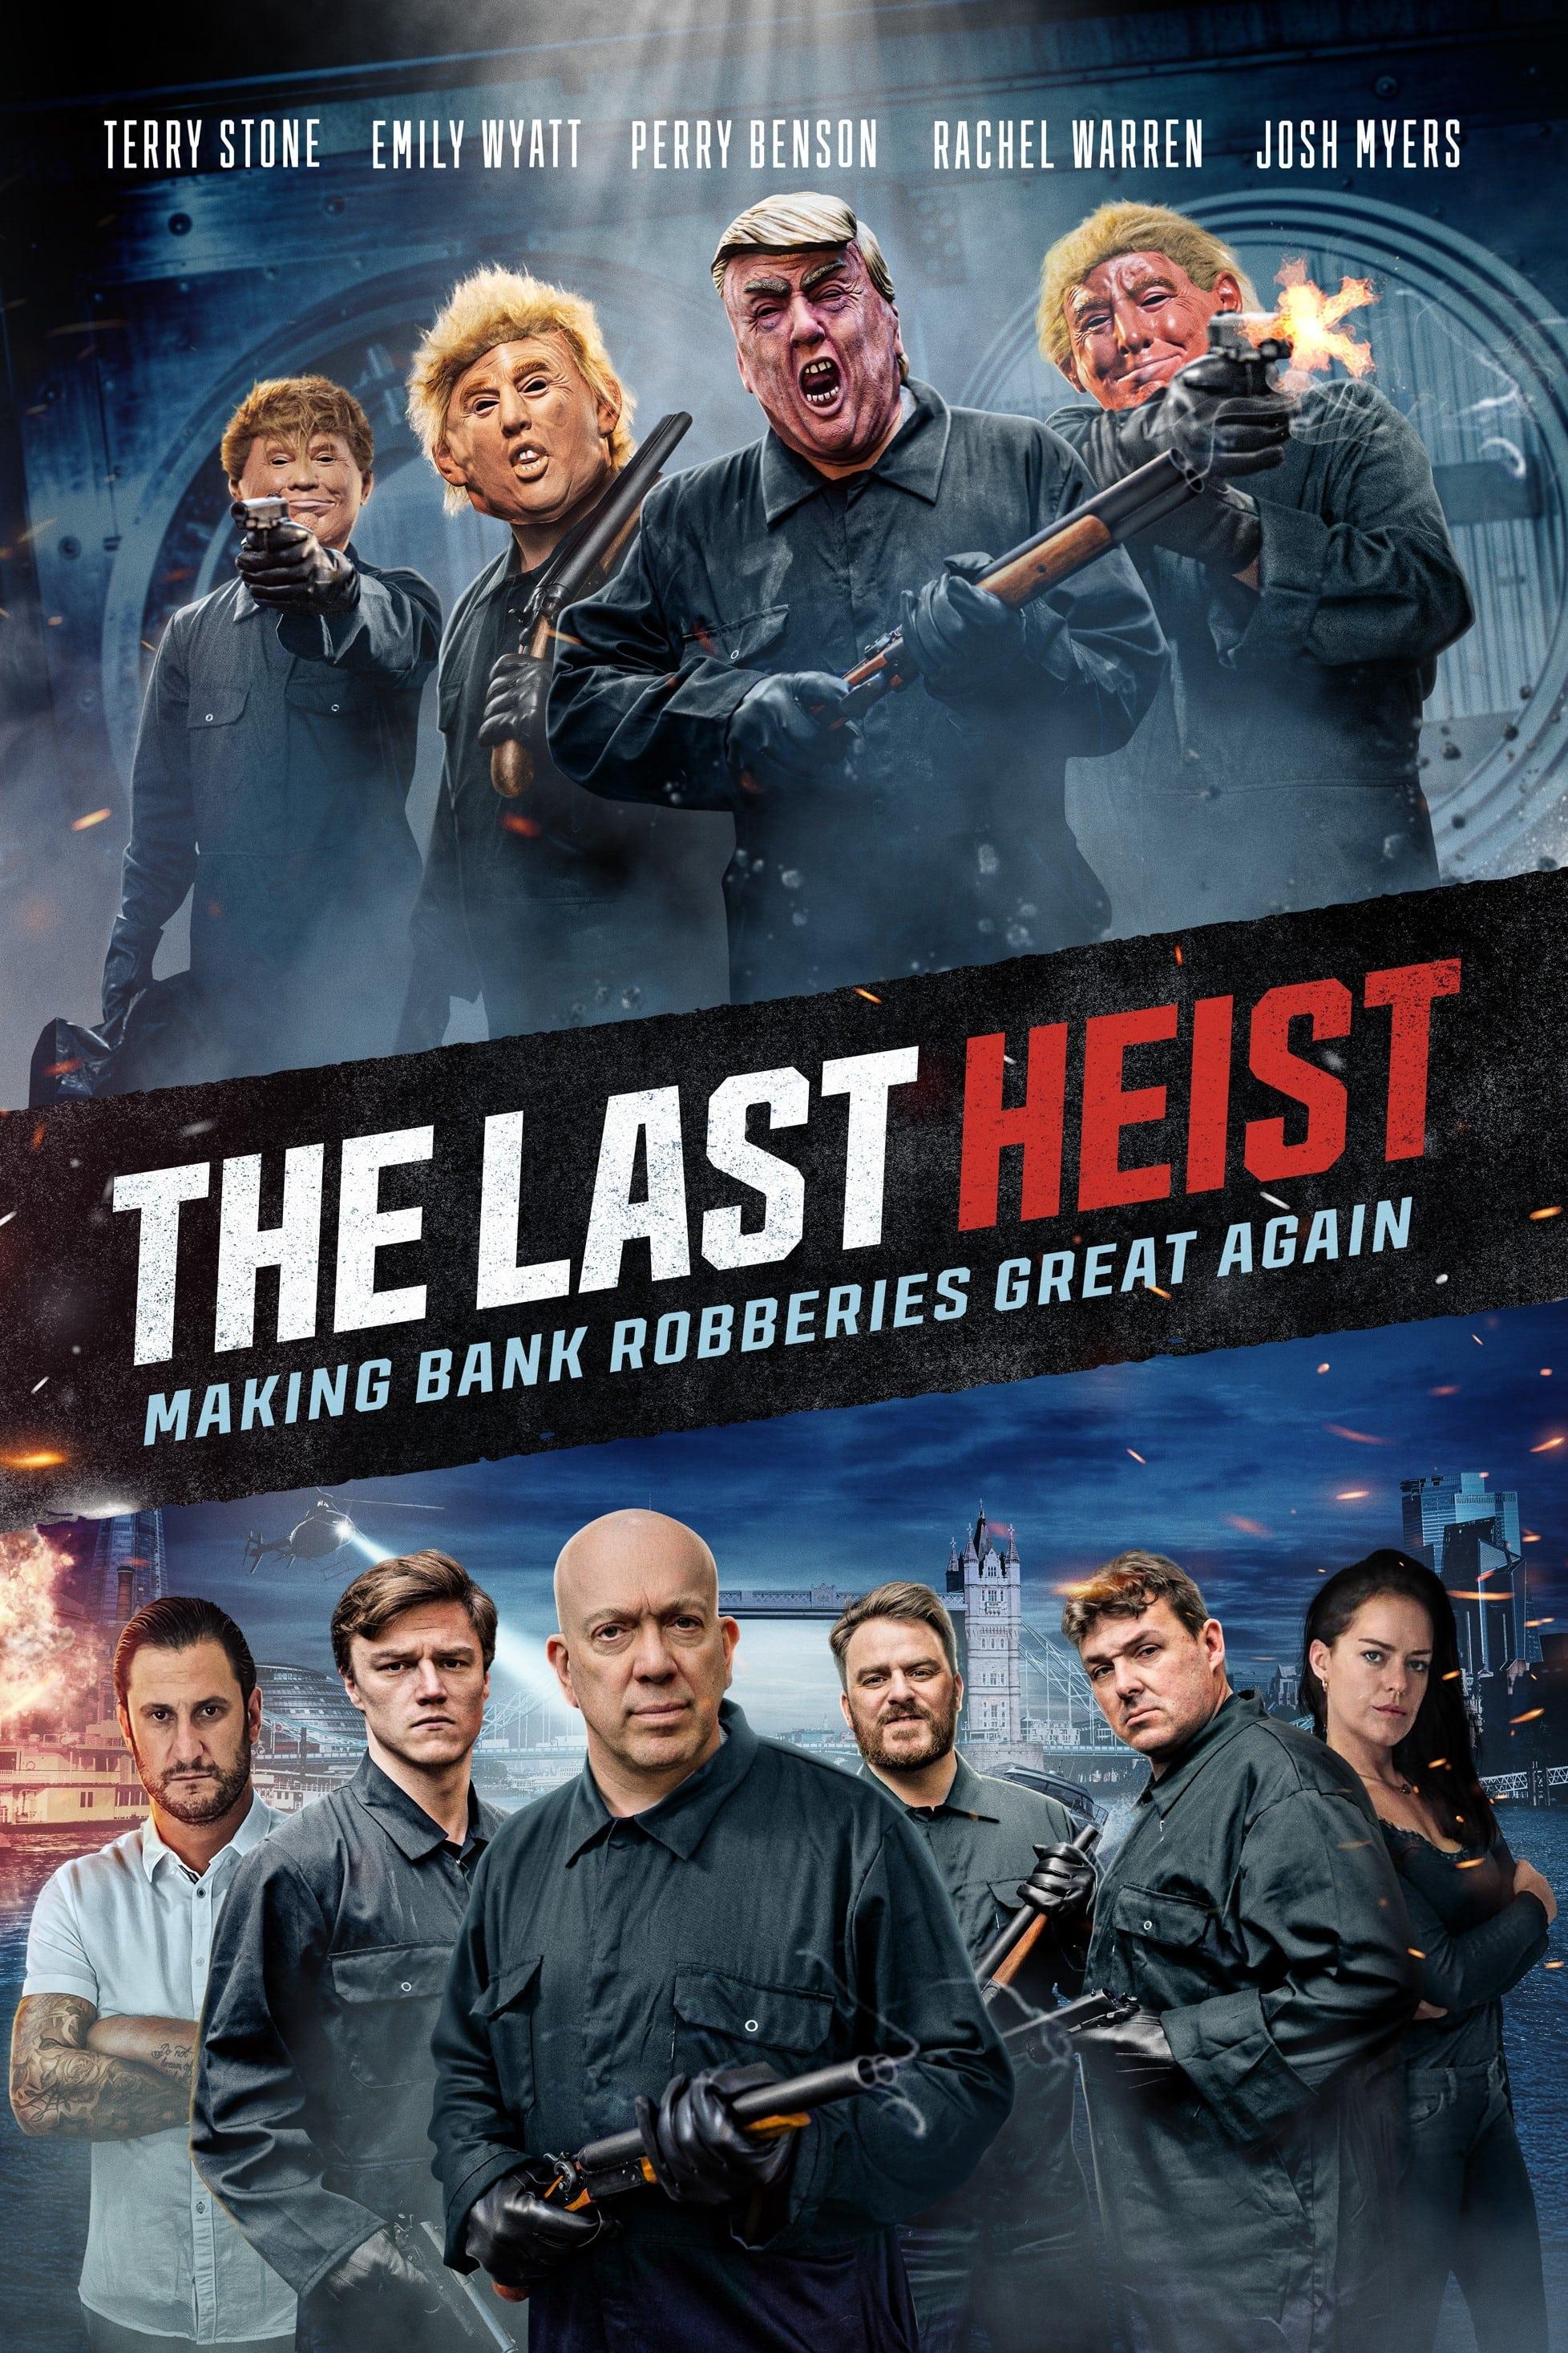 The Last Heist poster